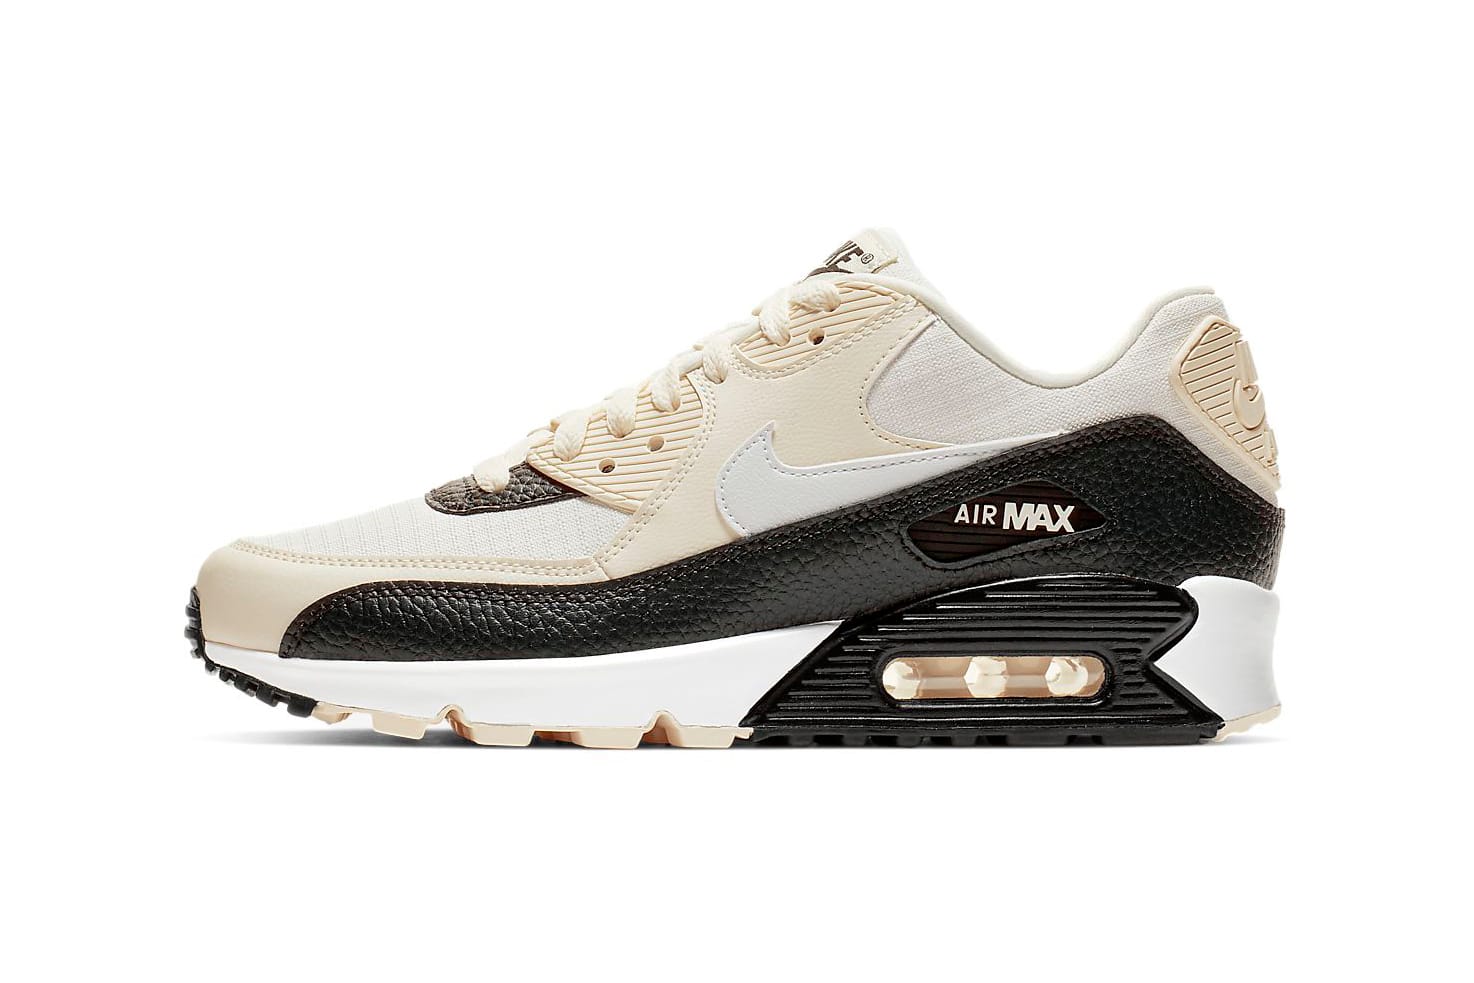 Nike Air Max 90 in Ivory, Black and Oil Grey | HYPEBAE